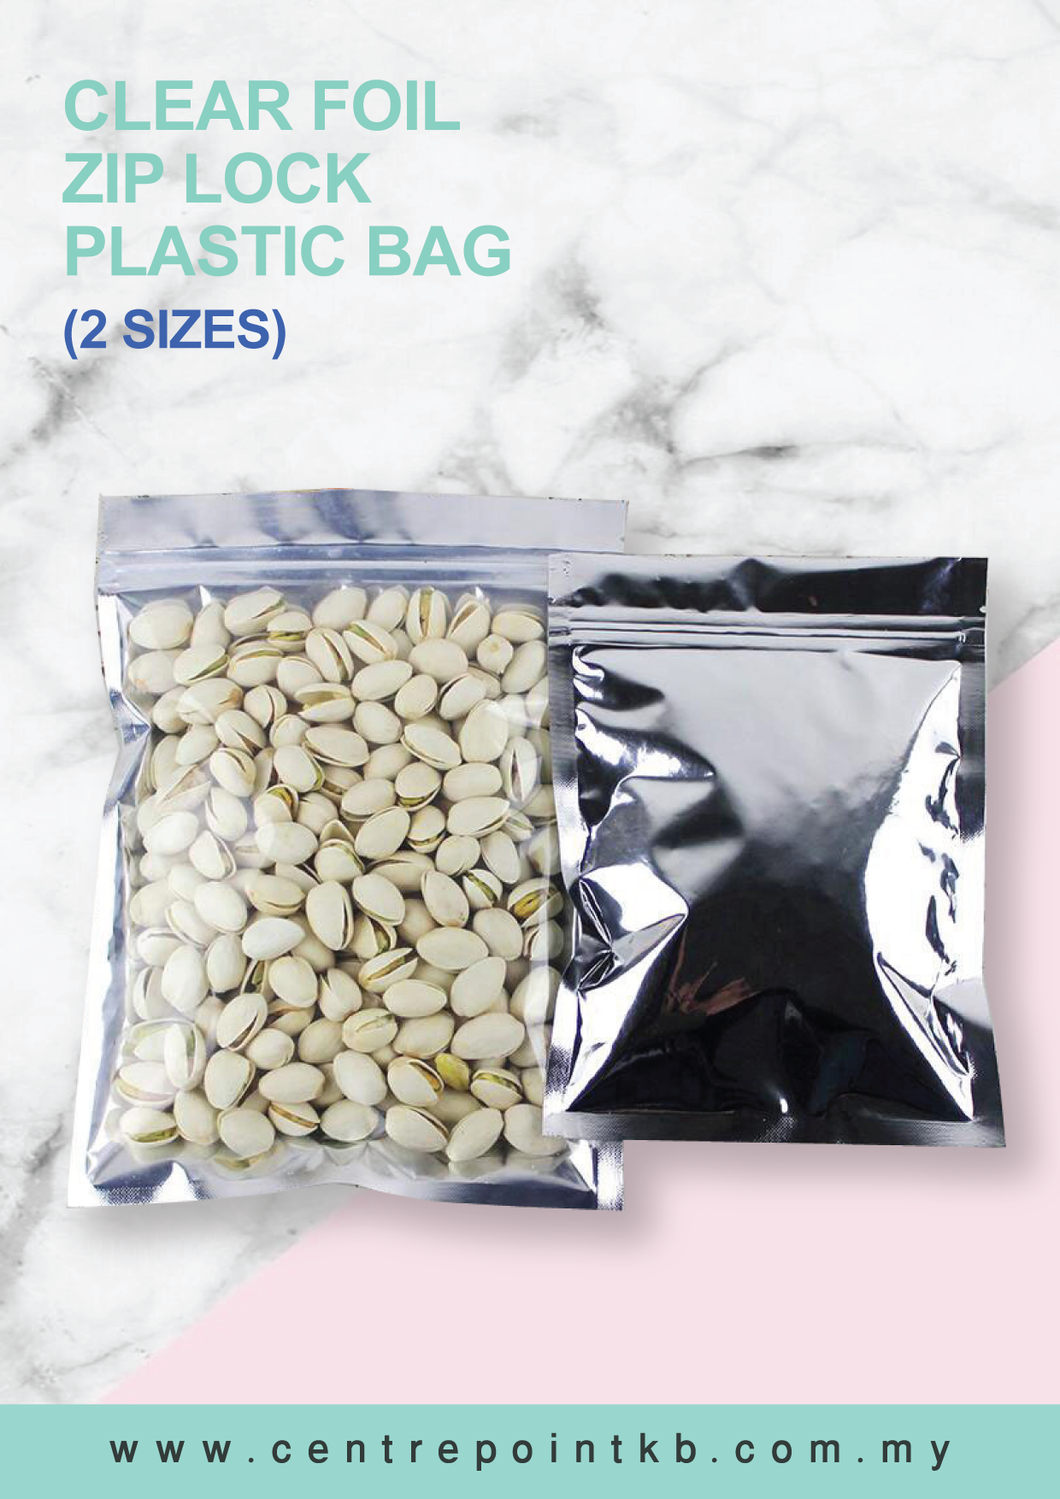 Clear Foil Zip Lock Plastic Bag (2 Sizes)